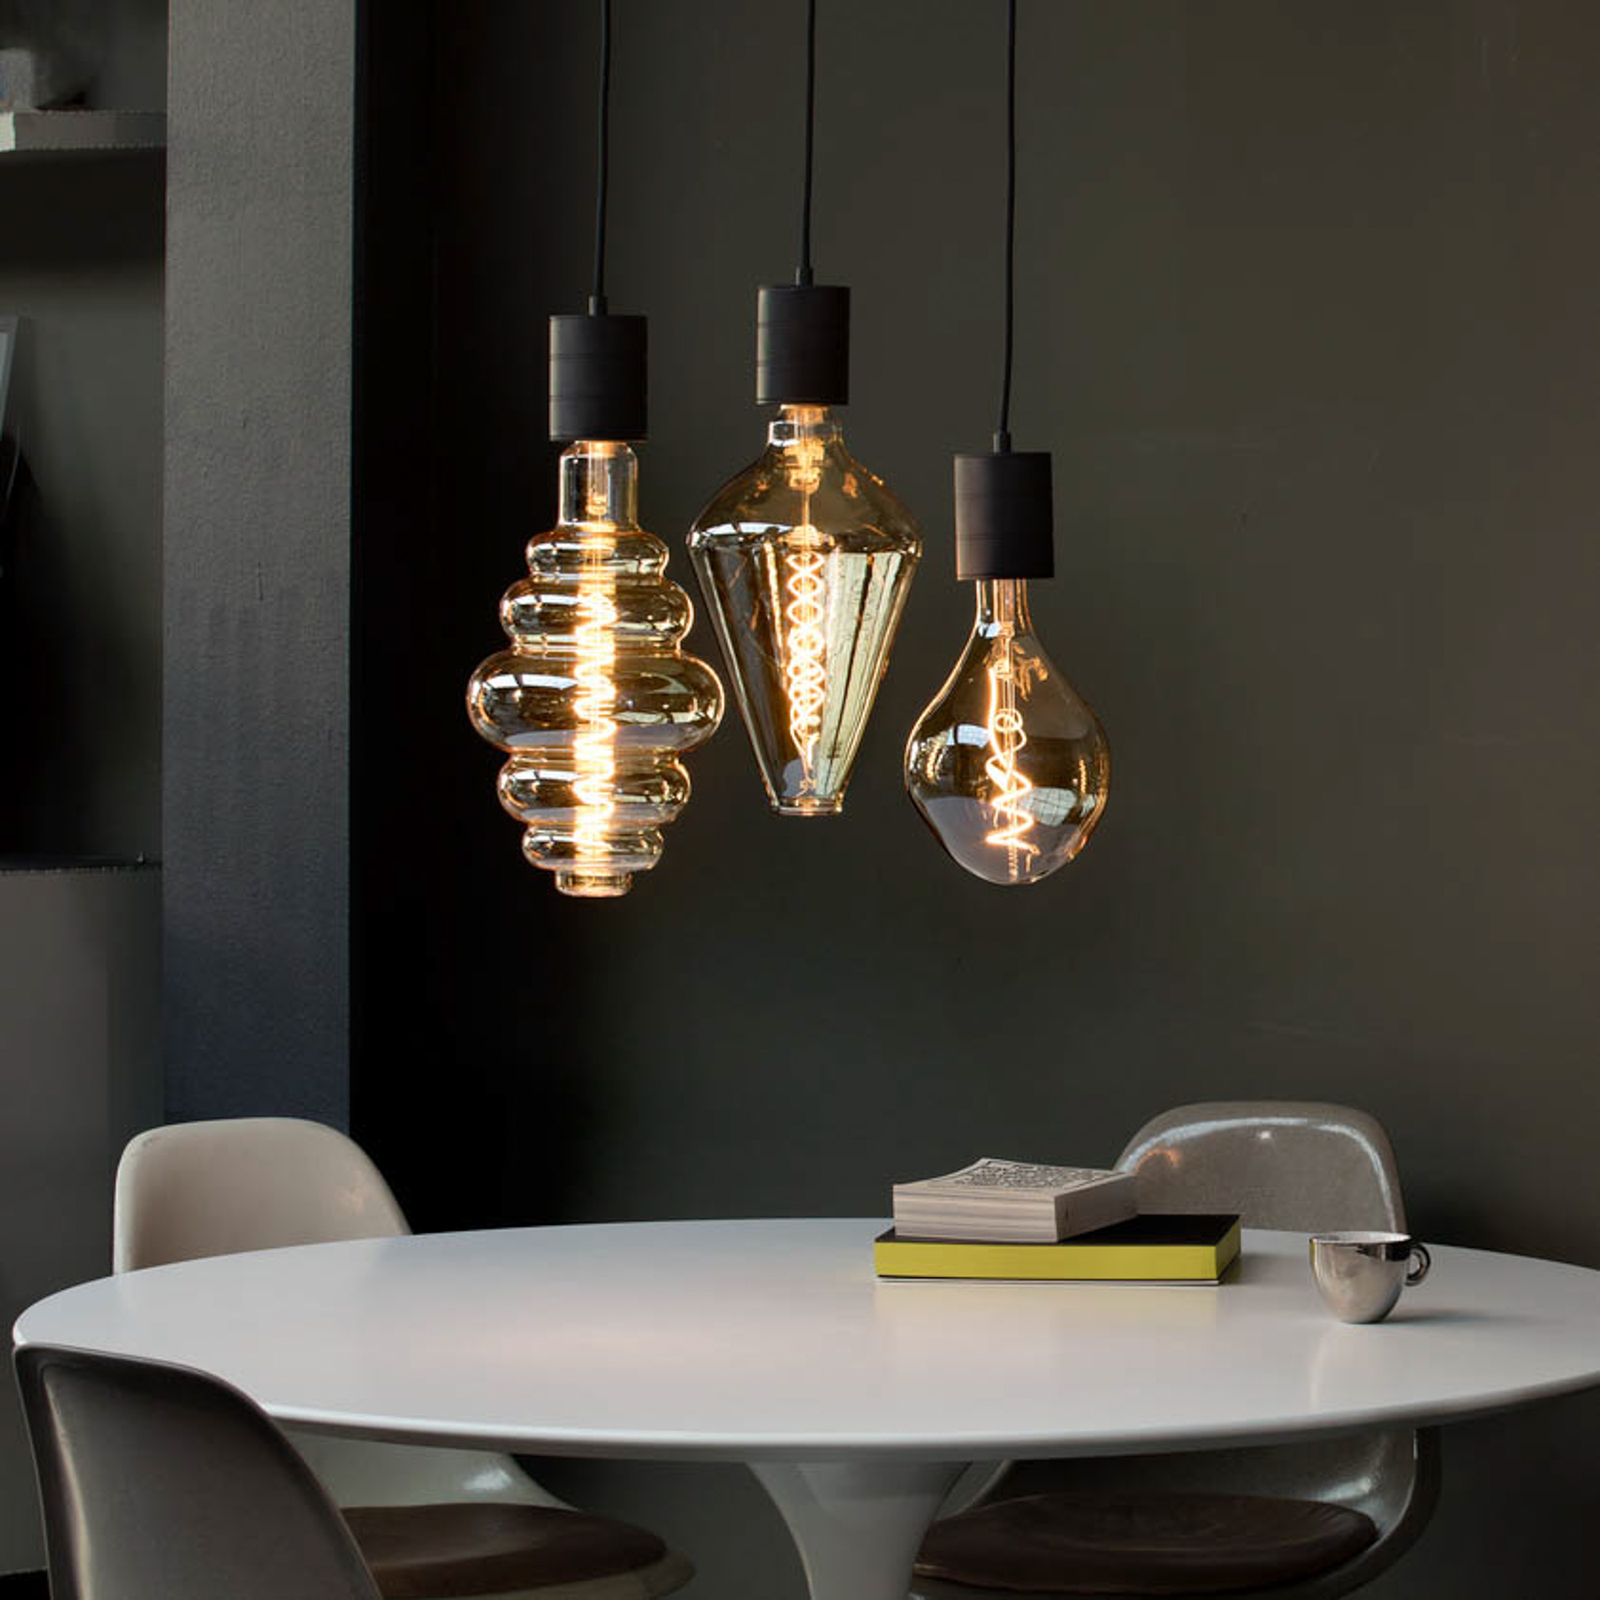 Calex Organic Evo LED bulb E27 6 W dimmable gold